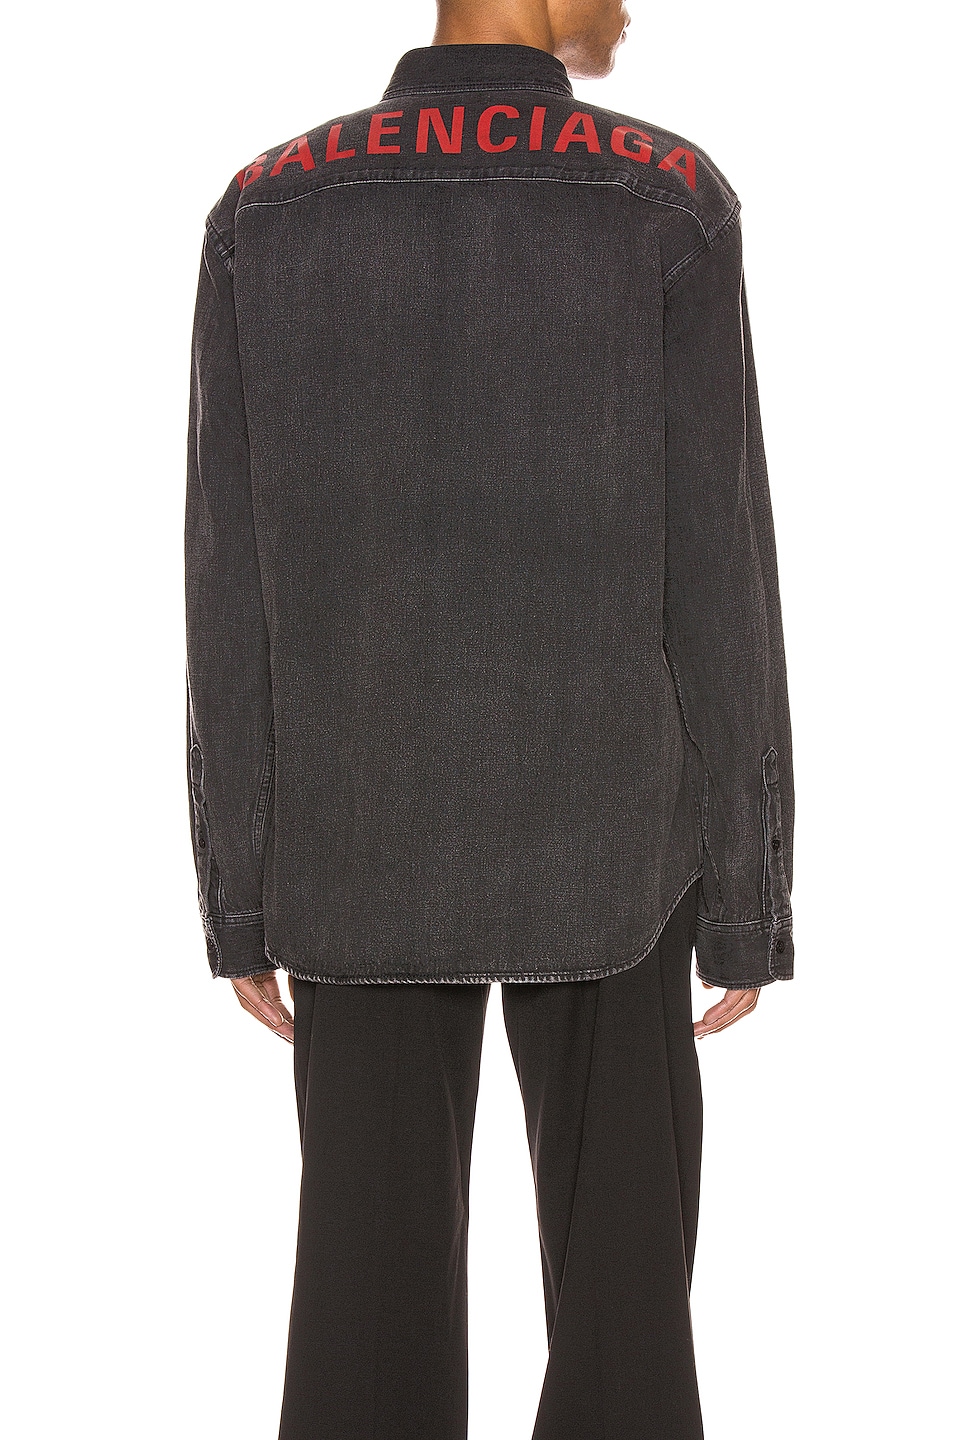 Balenciaga Normal Fit Long Sleeve in Givre & Black | FWRD